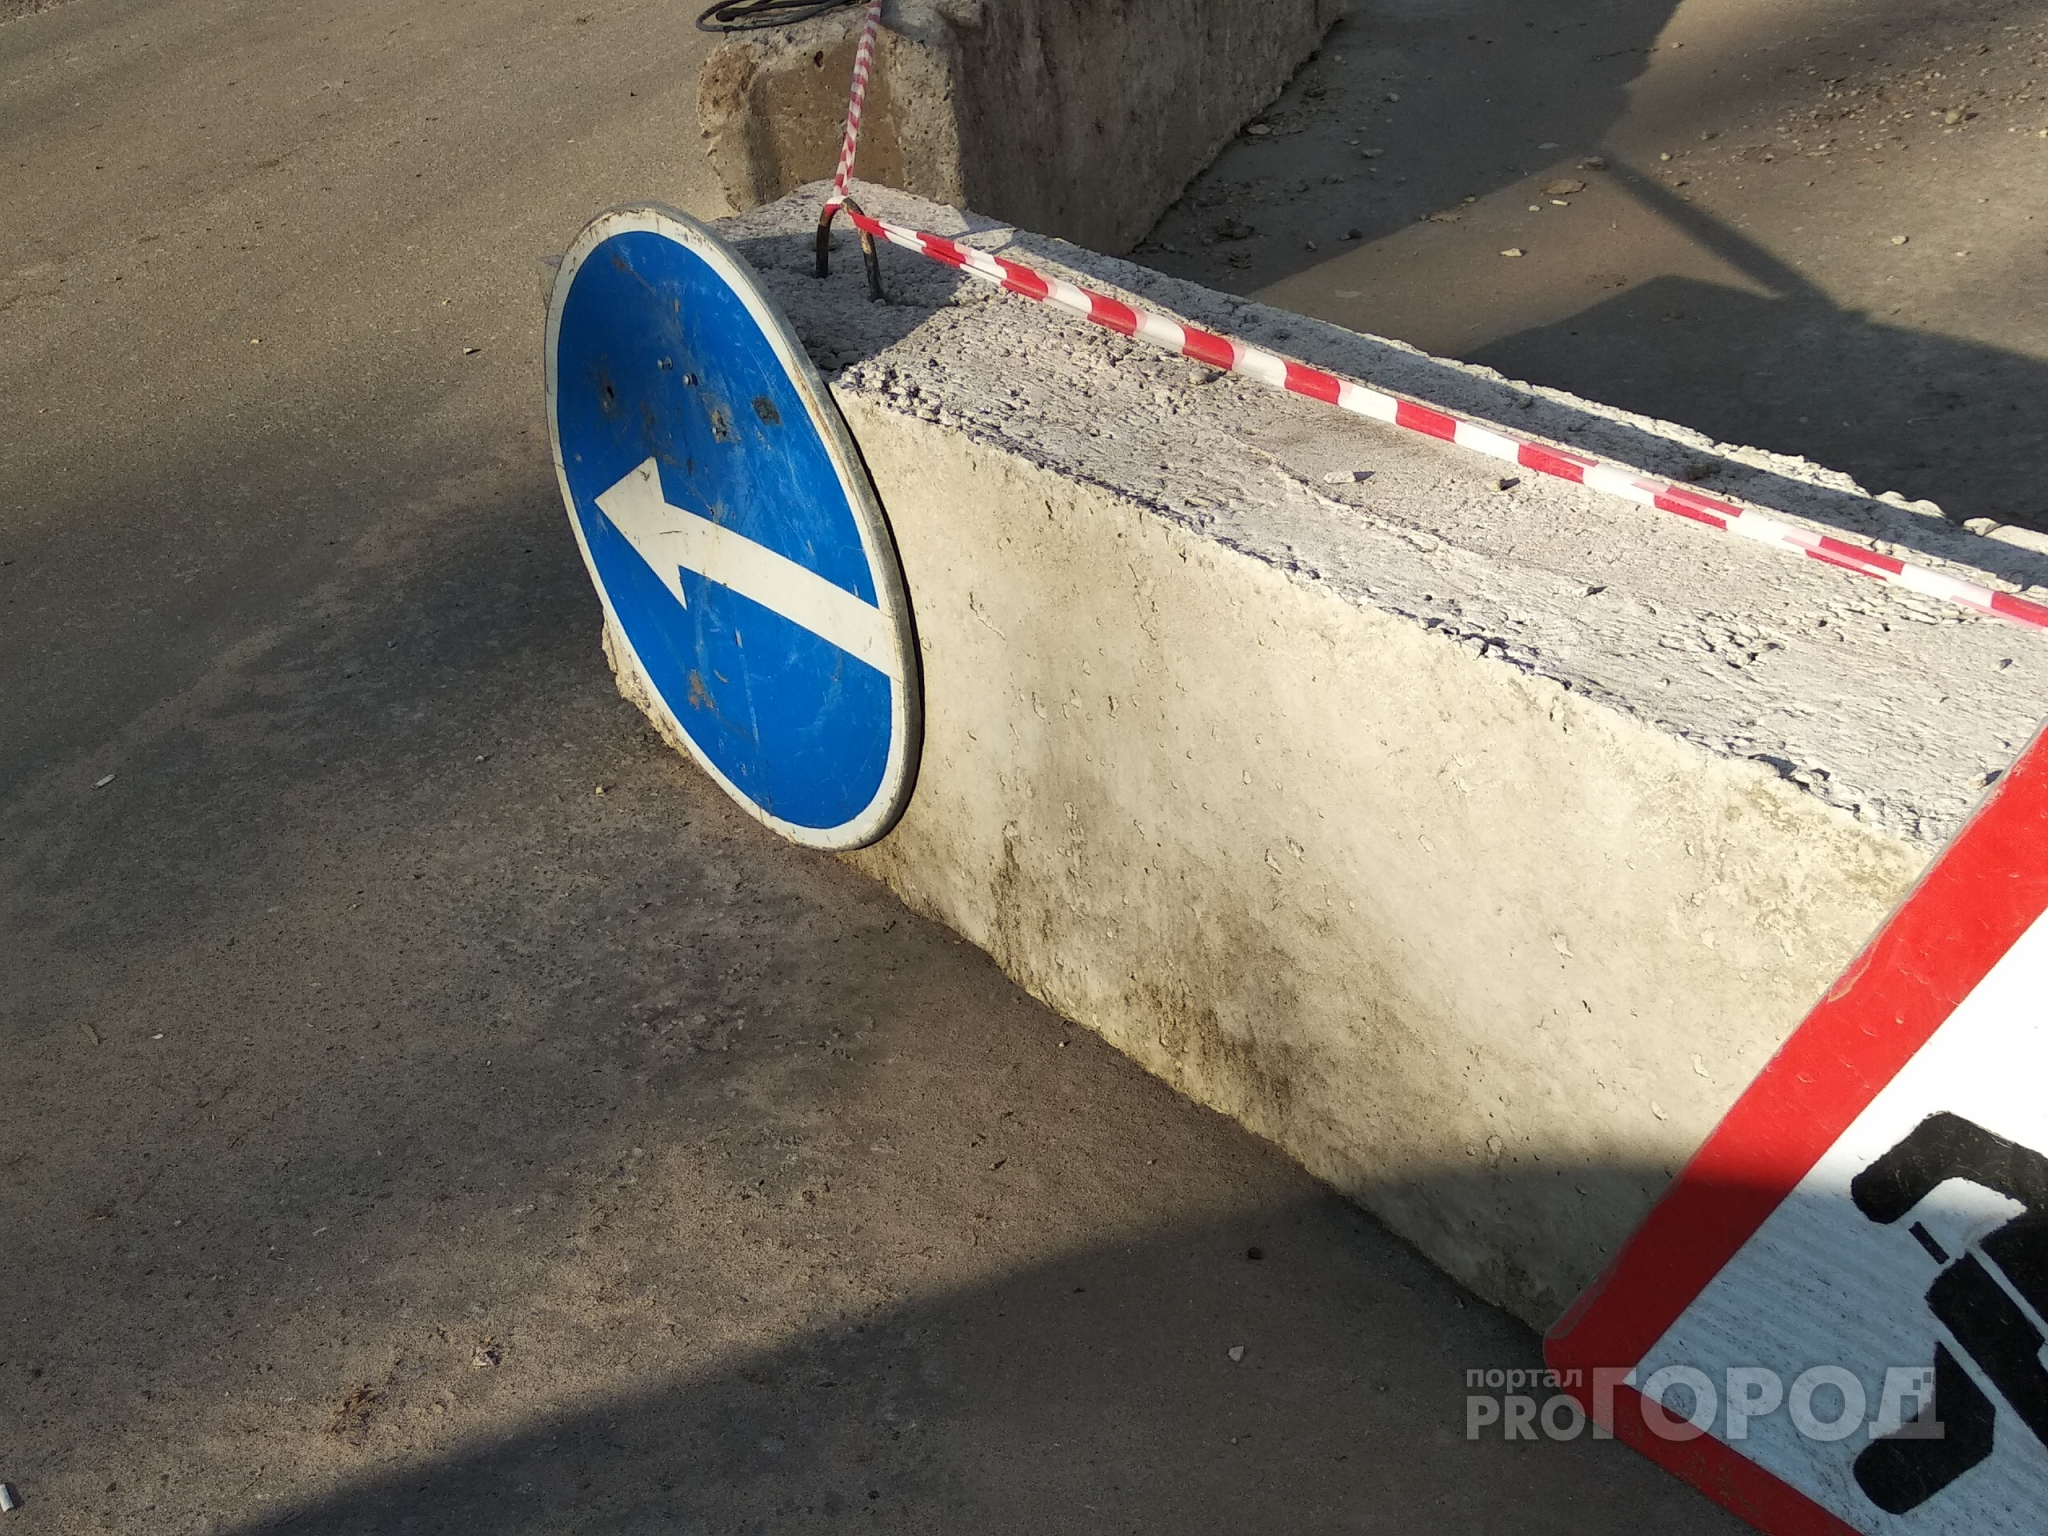 Почти на месяц запретят движение транспорта на улице в Йошкар-Оле